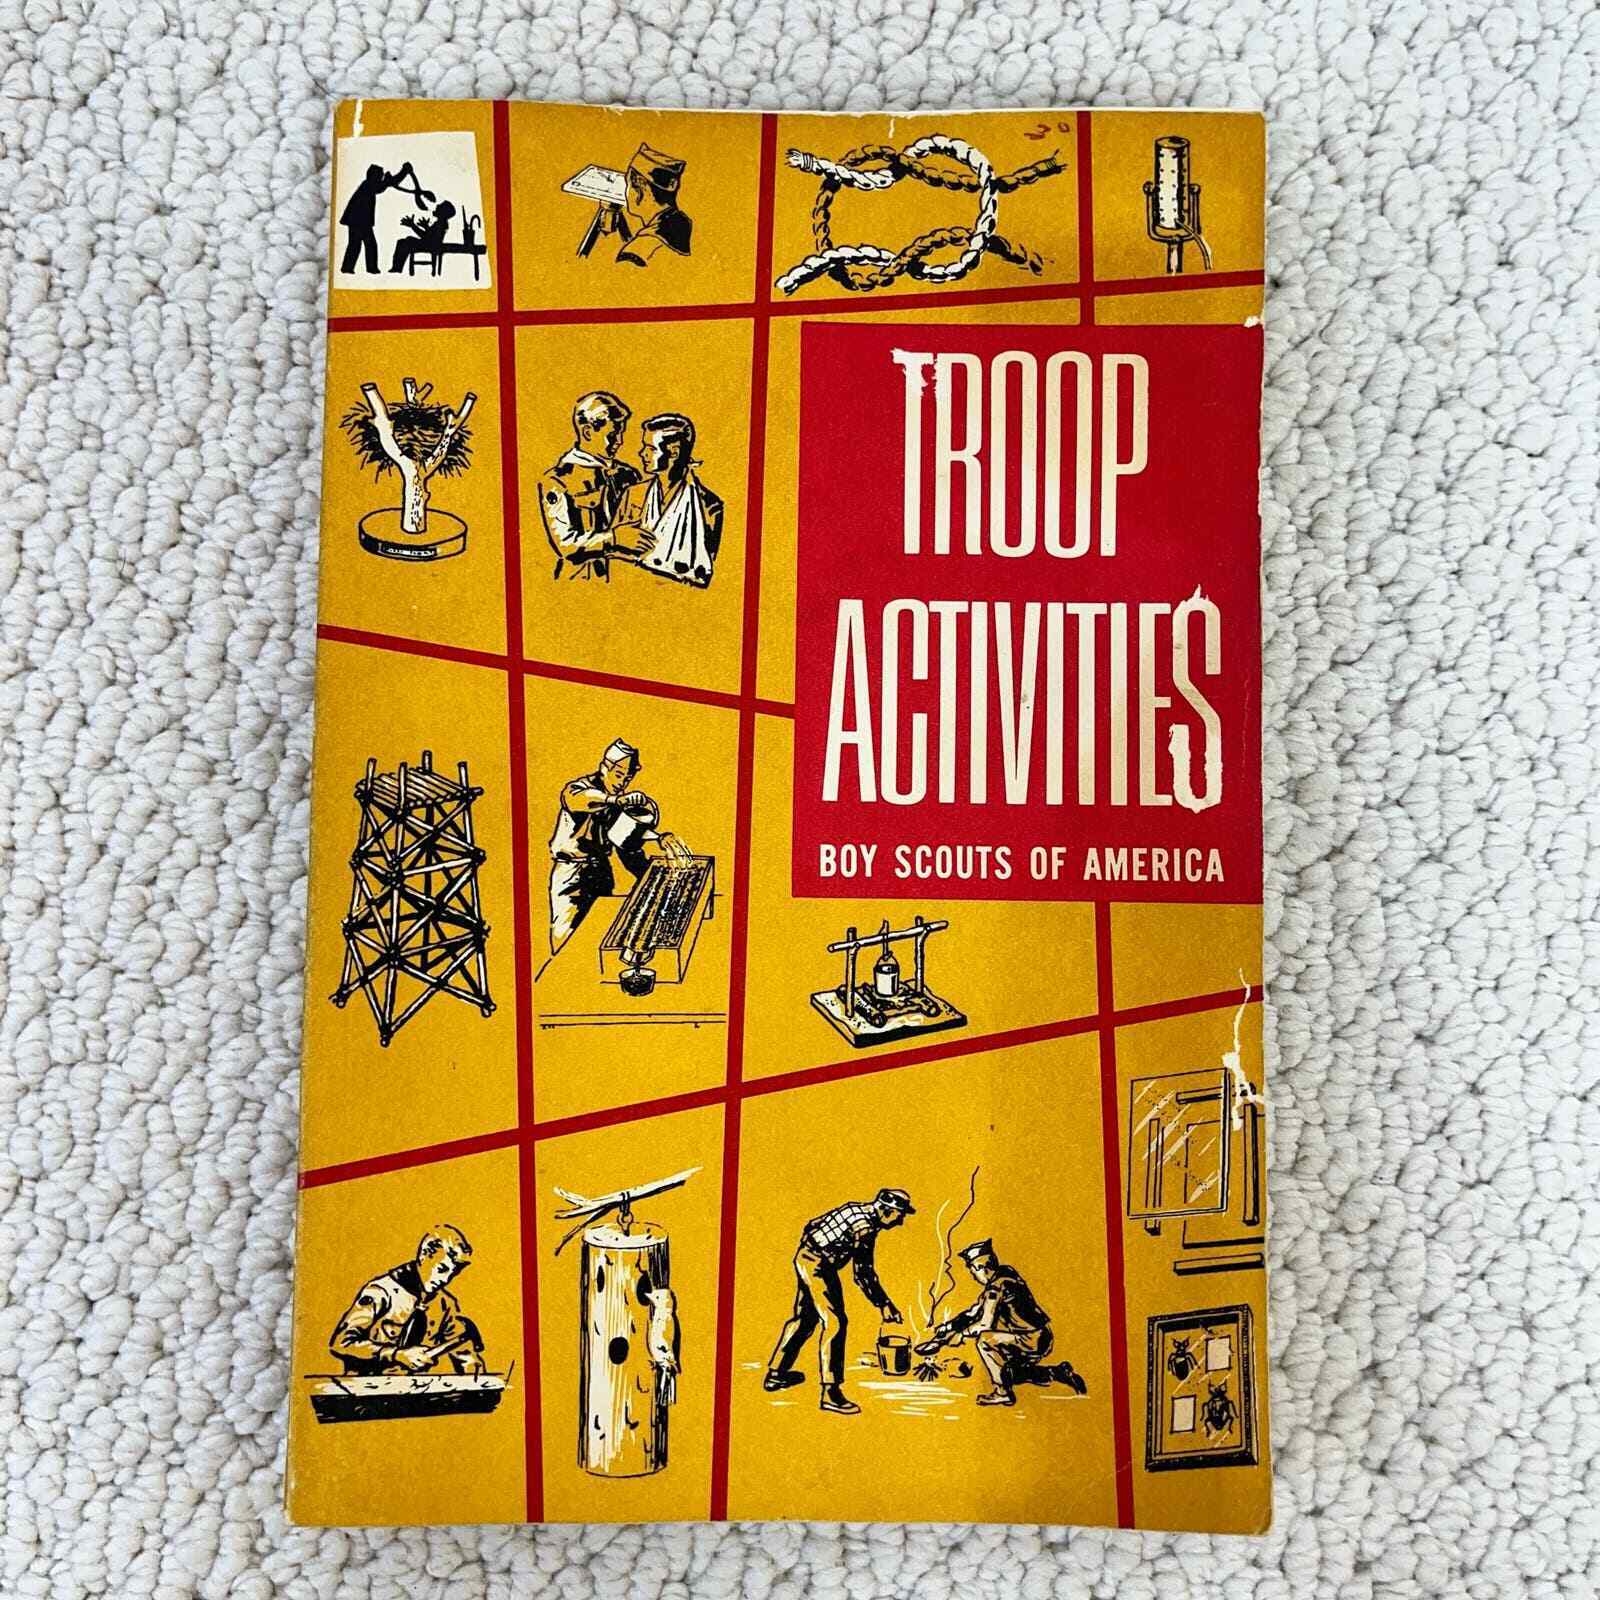 Troop Activities BSA Boy Scouts of America Handbook 1969 Softcover Very Good